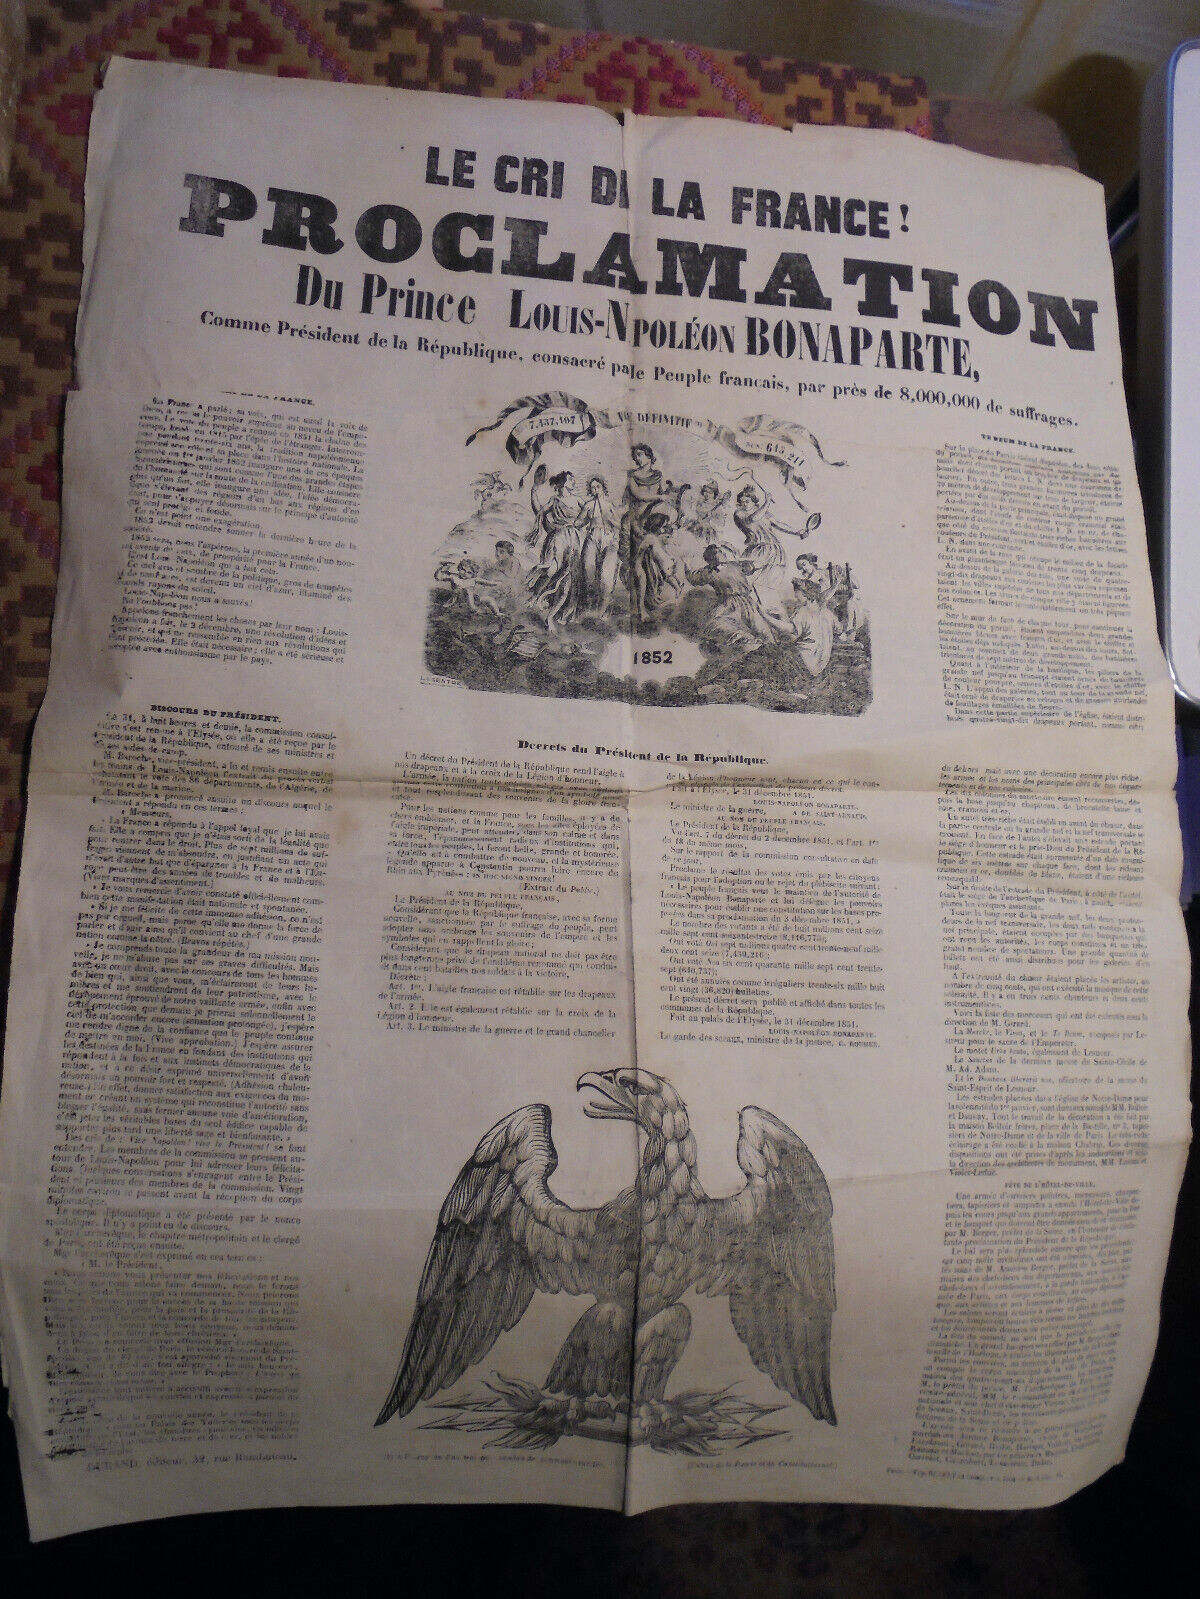 poster 1852 Proclamation Prince Louis-Napoleon Bonaparte President of the Republic